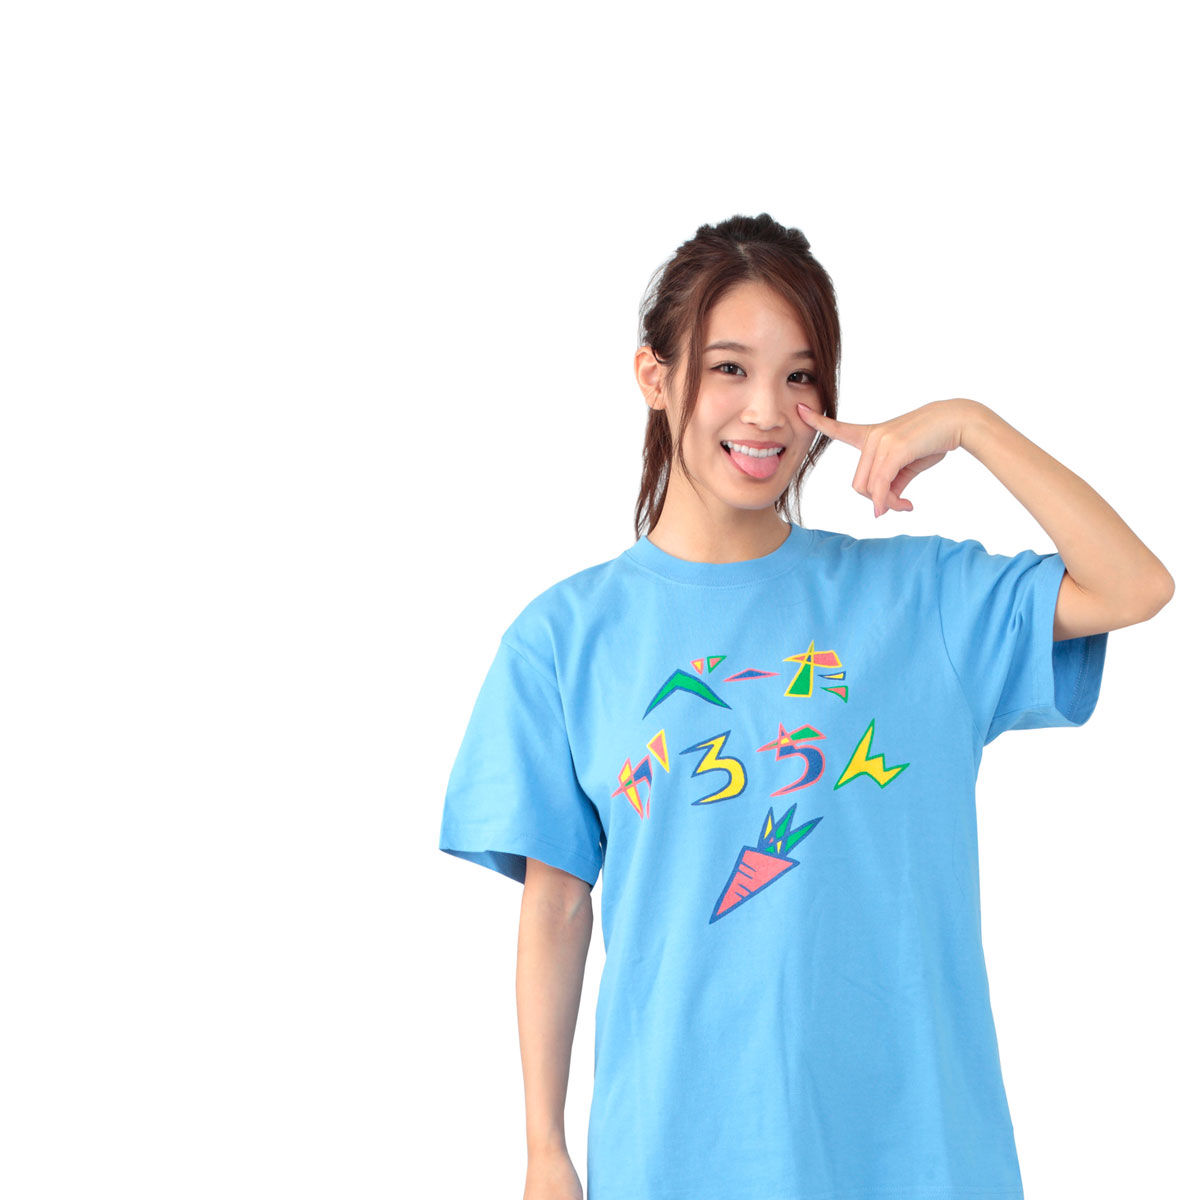 Ultraman R/B UshioMinato selected T-shirts β-carotene